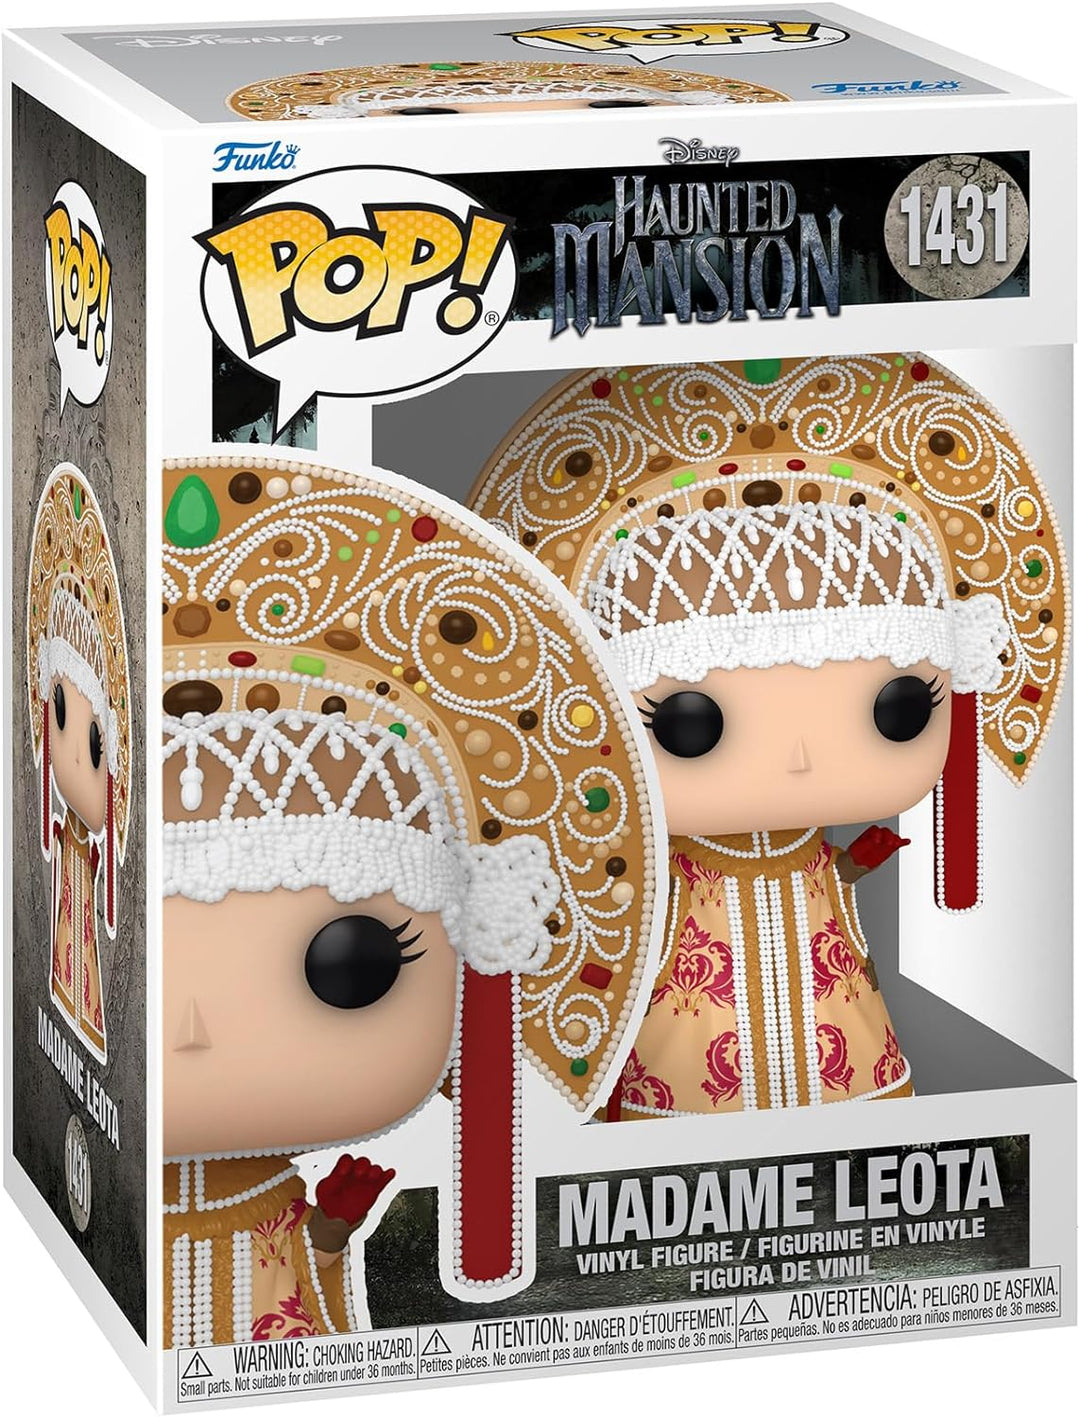 Disney: The Haunted Mansion - Madame Leota - Collectable Vinyl Figure